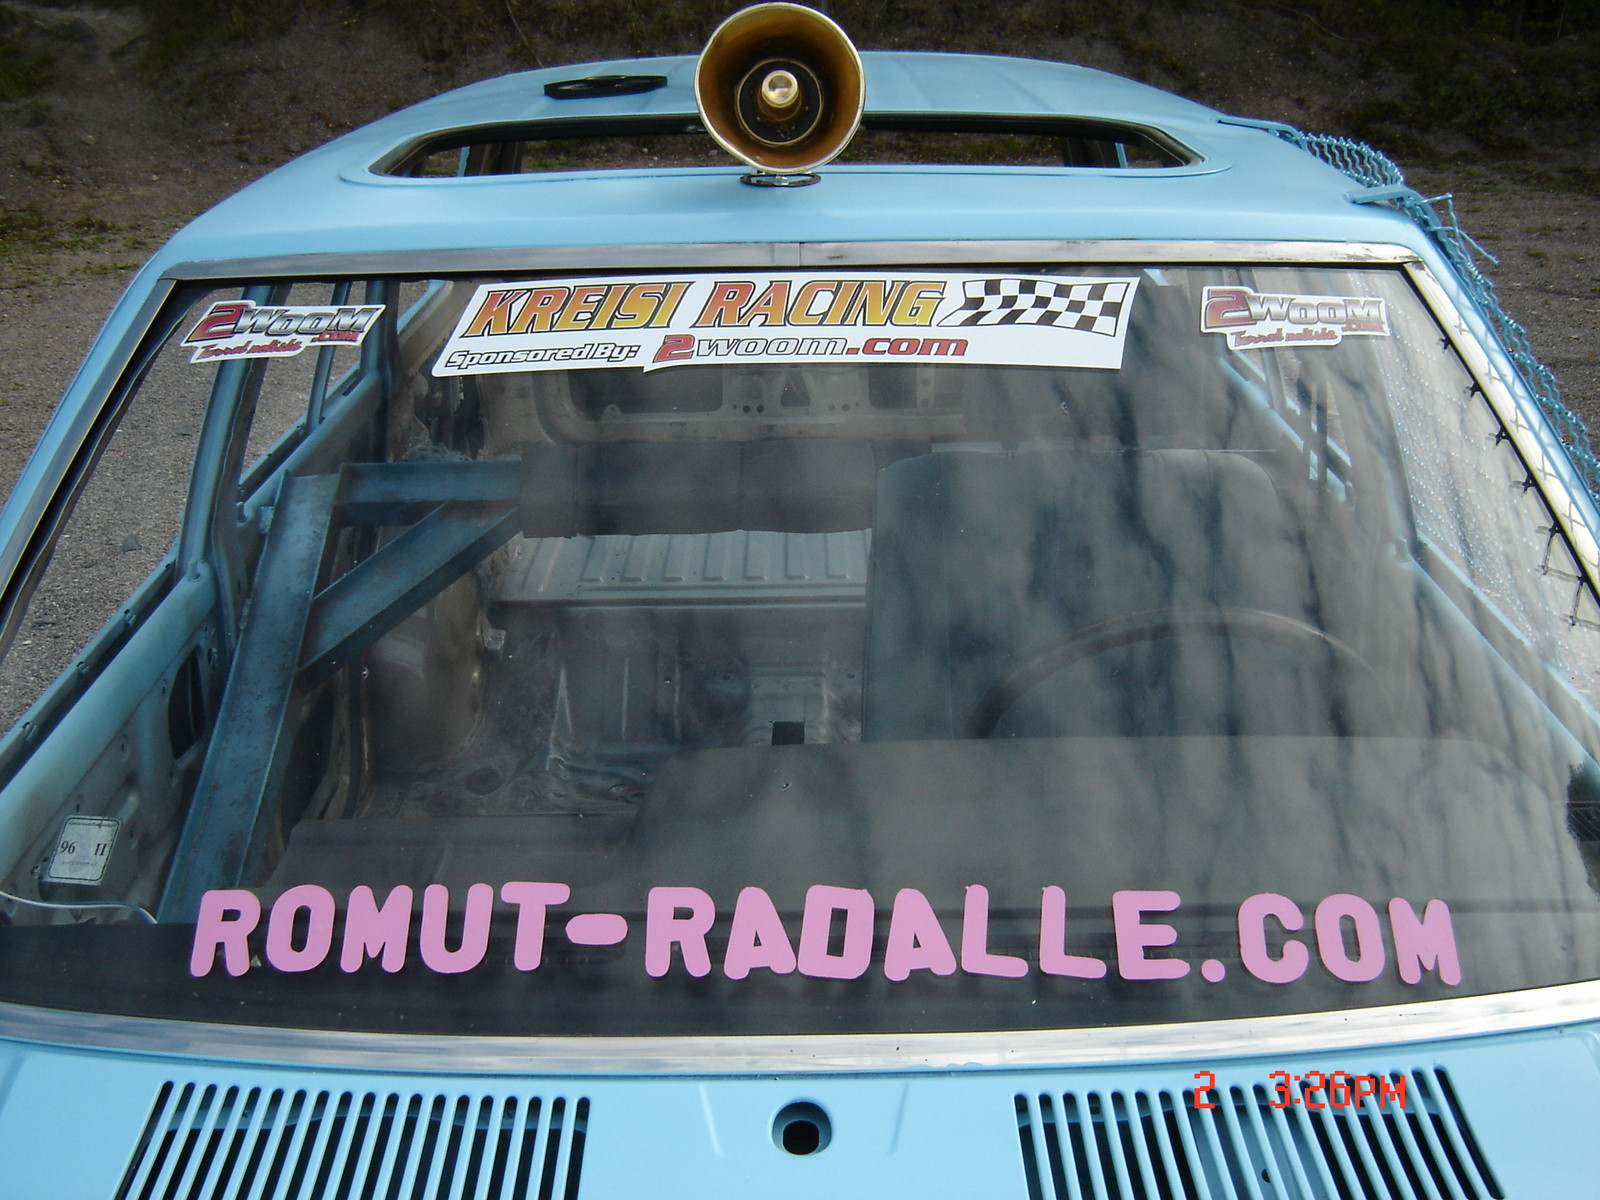 Romuralli 3.9.2006 Hakuninmaa, Kreisi Racing, Romut-radalle.com